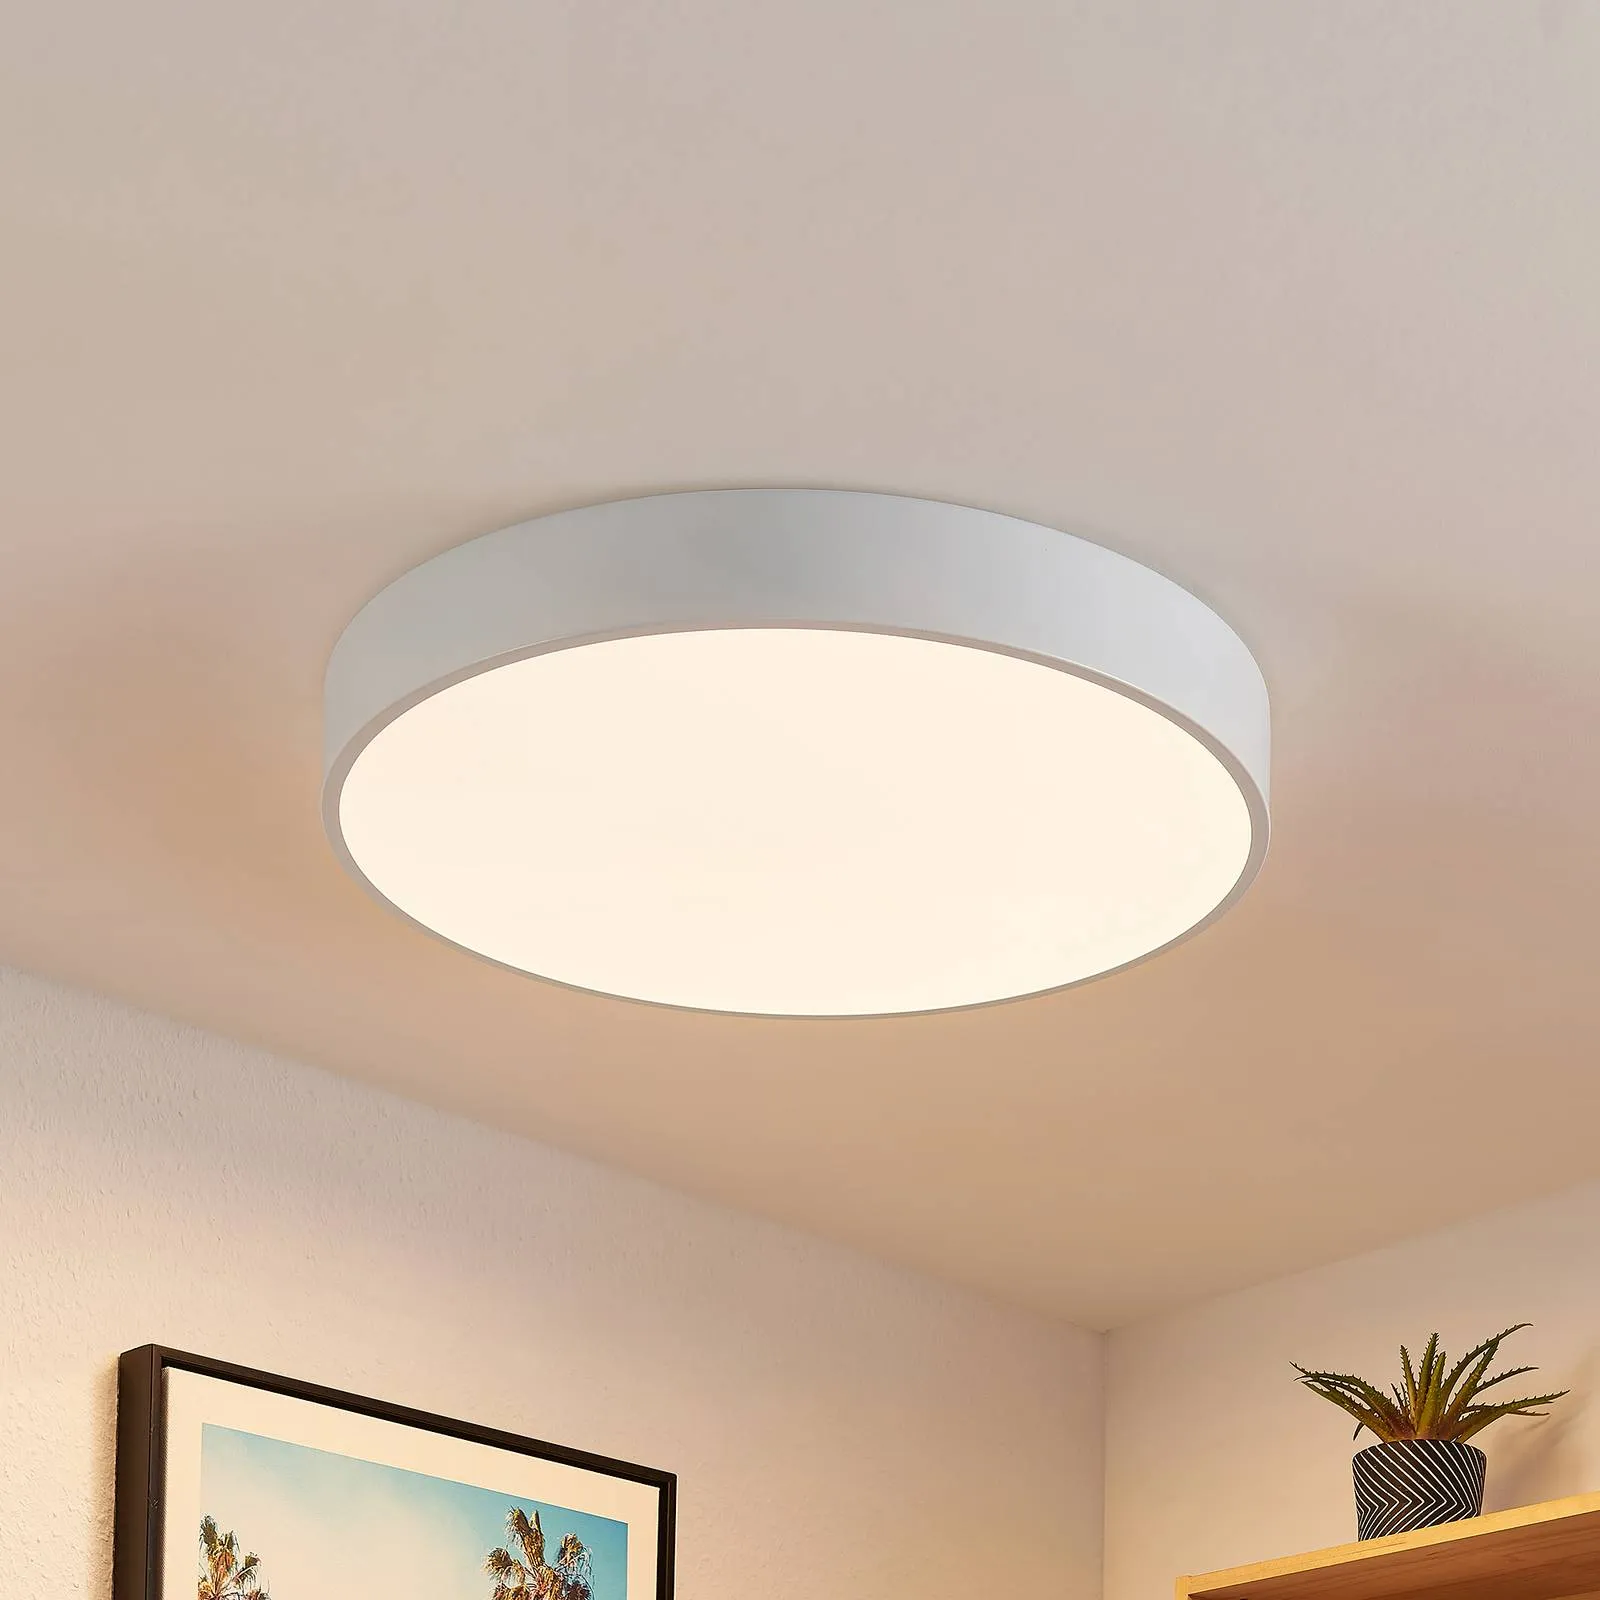 Lindby Simera LED ceiling light 50 cm, white